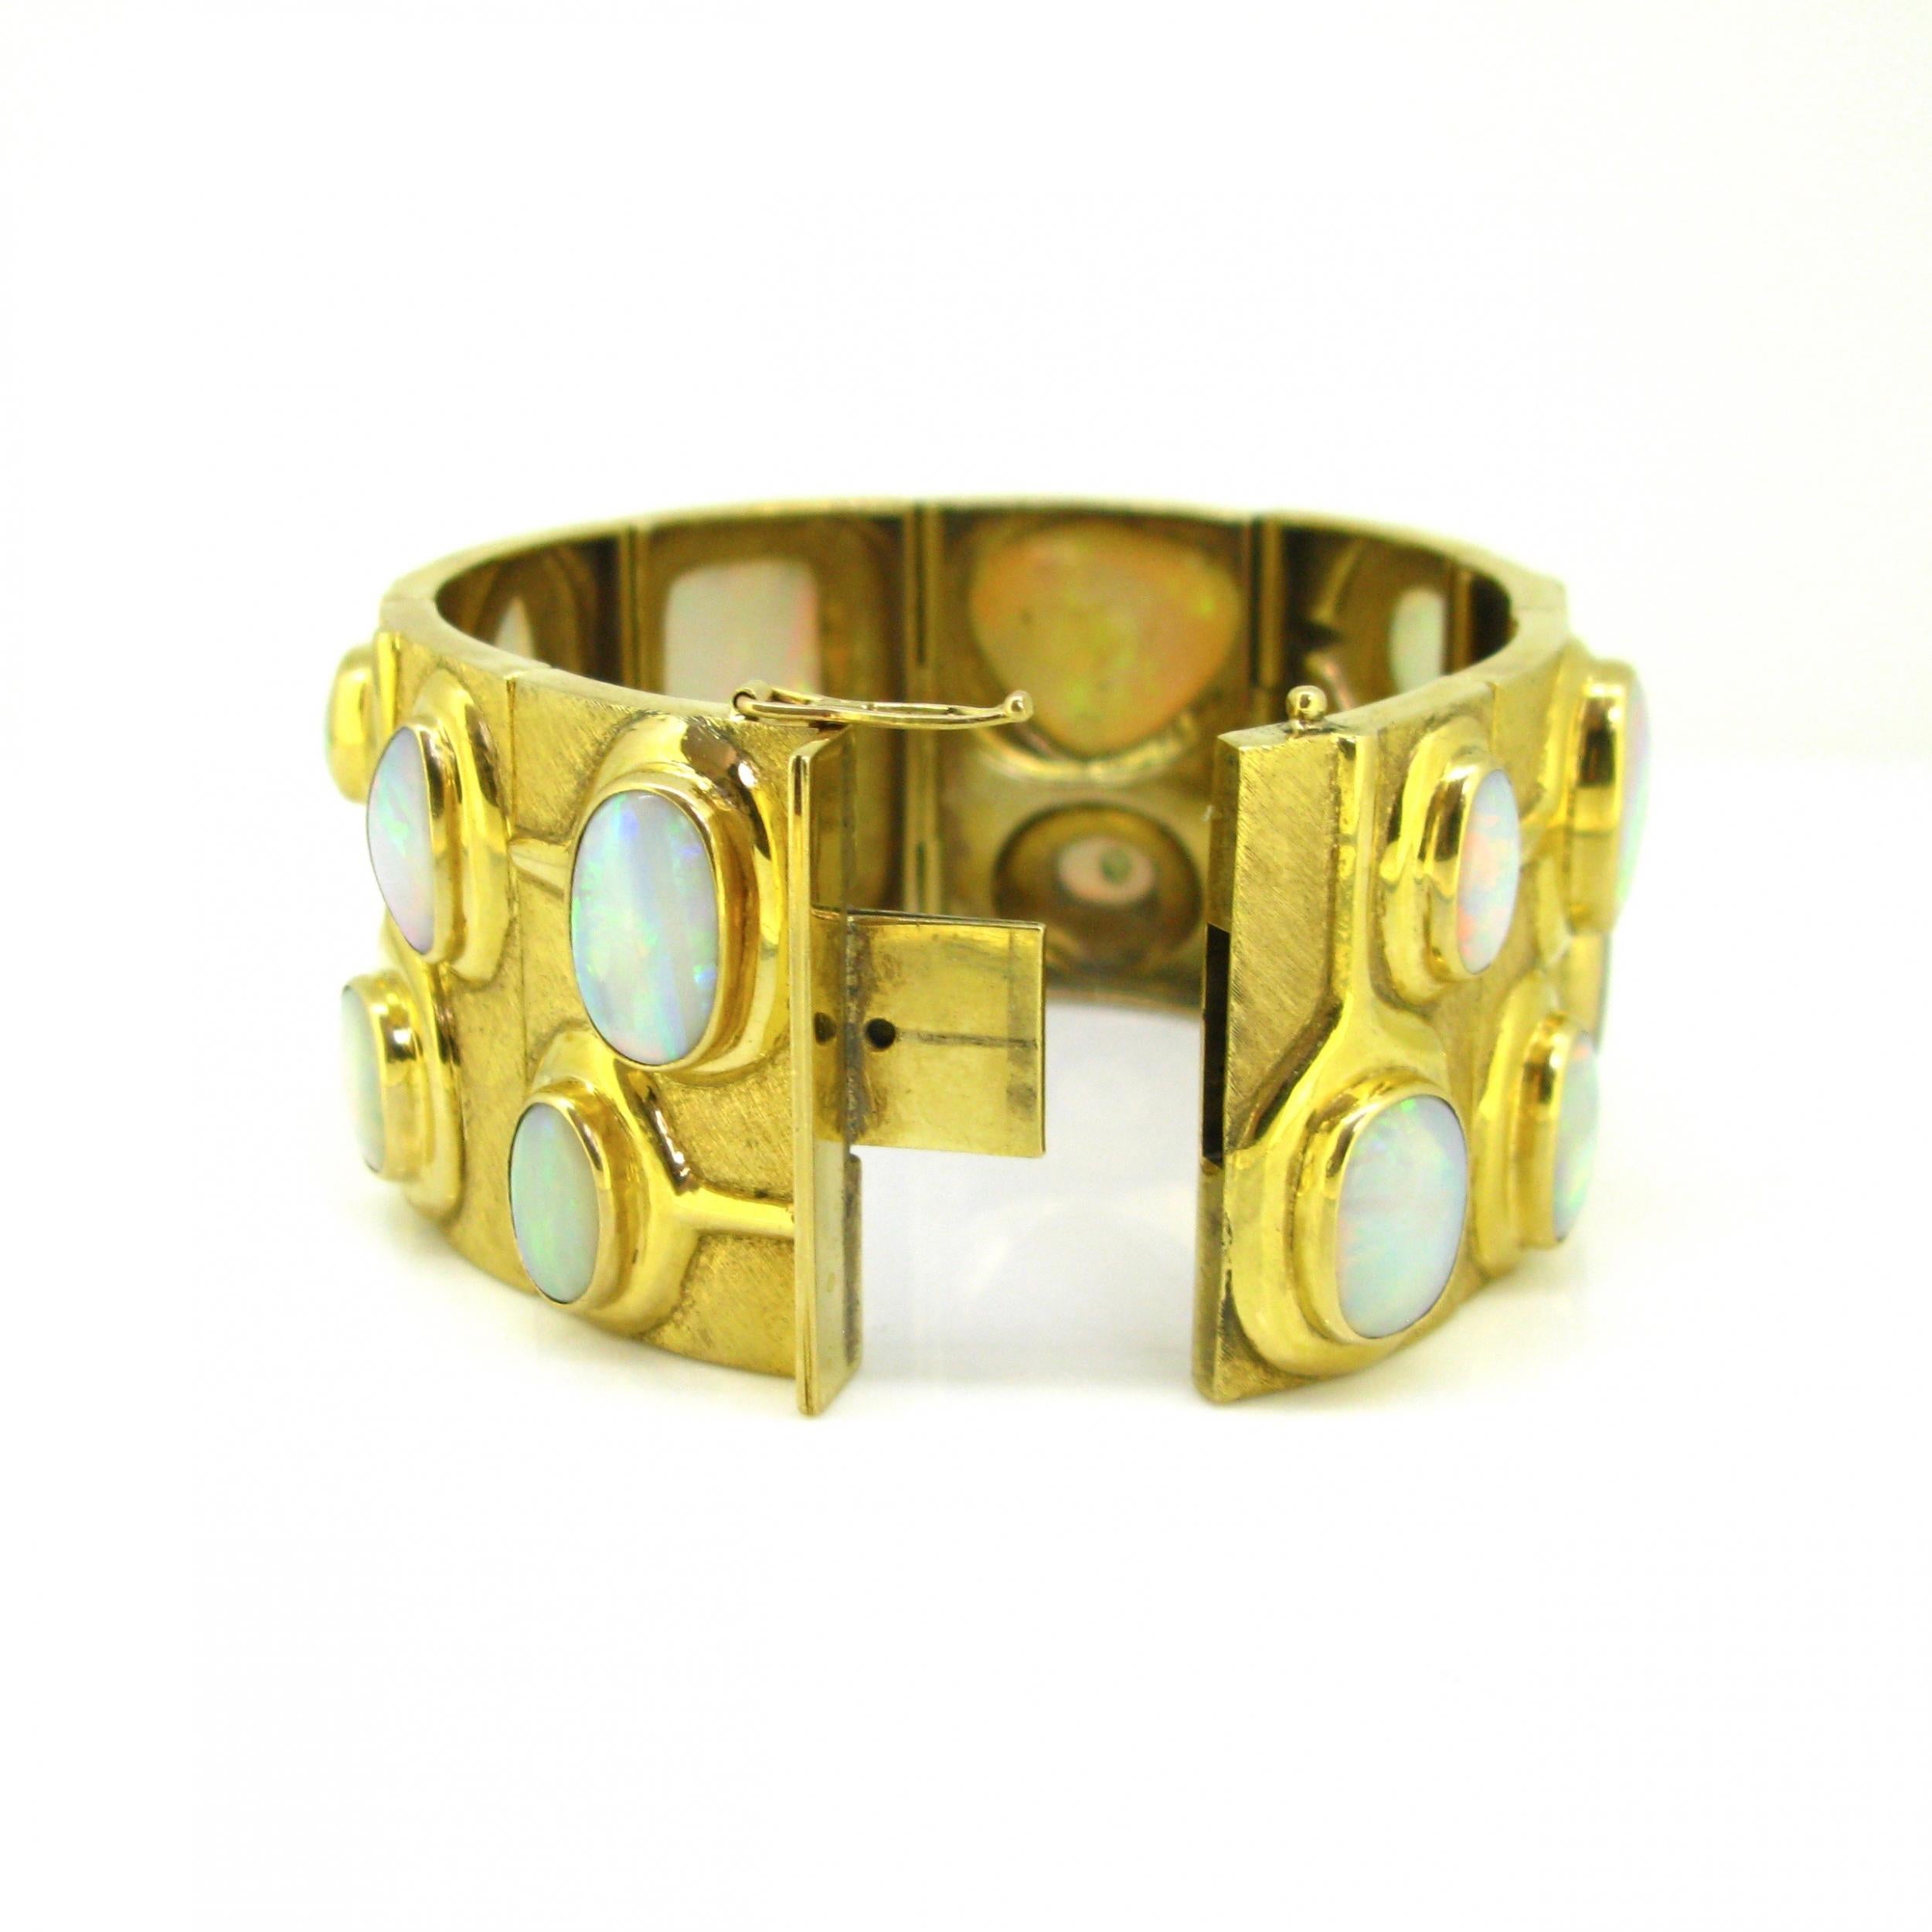 Vintage 17 Opals Large Bracelet Bangle by BURLE MARX, 18kt yellow gold circa 196 2